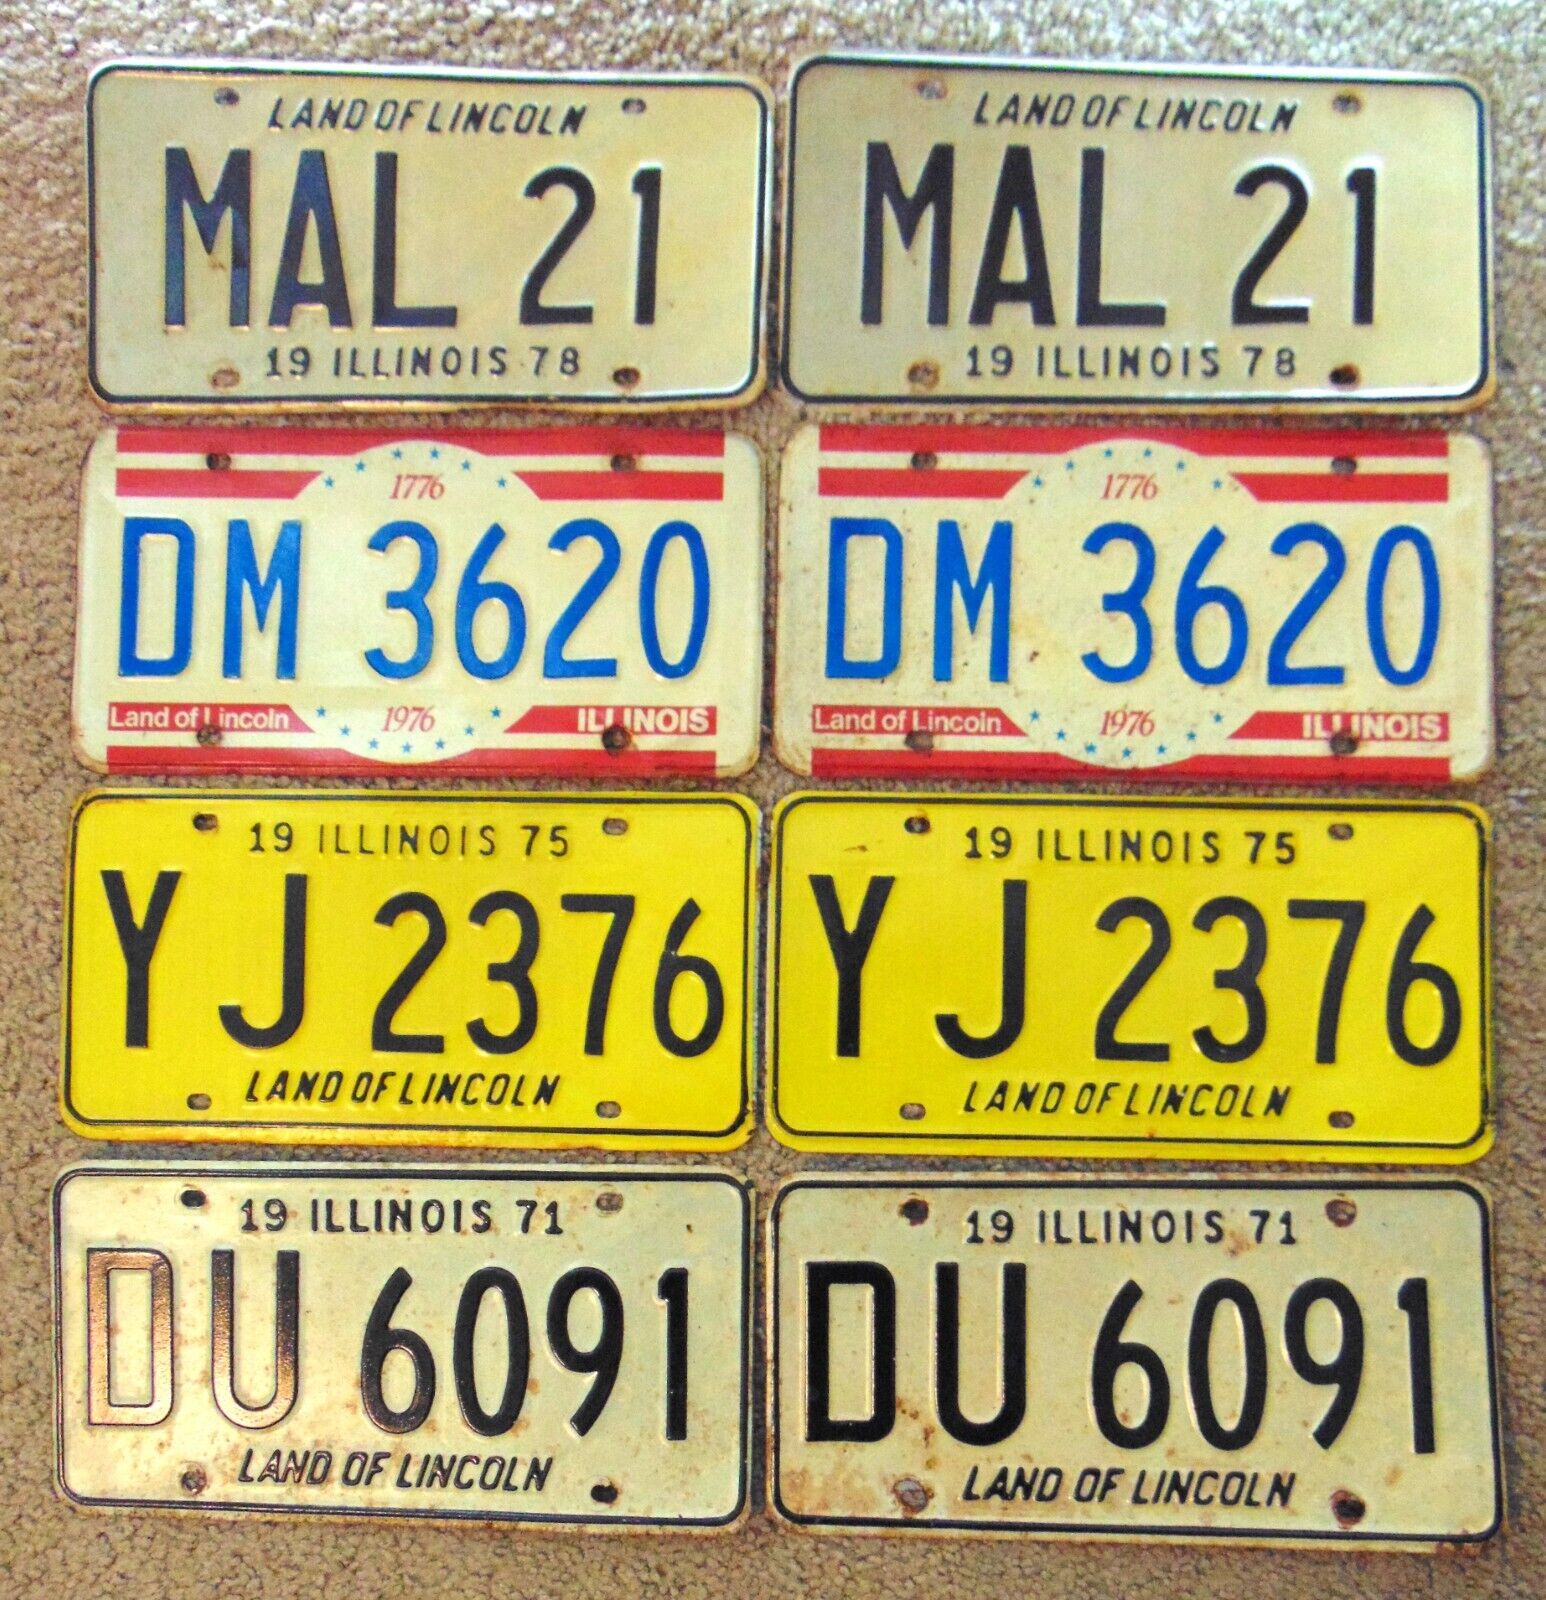 4 Pairs Illinois License Plates 1971  DU6091 1975 YJ2376 1976 DM3620 1978 MAL21